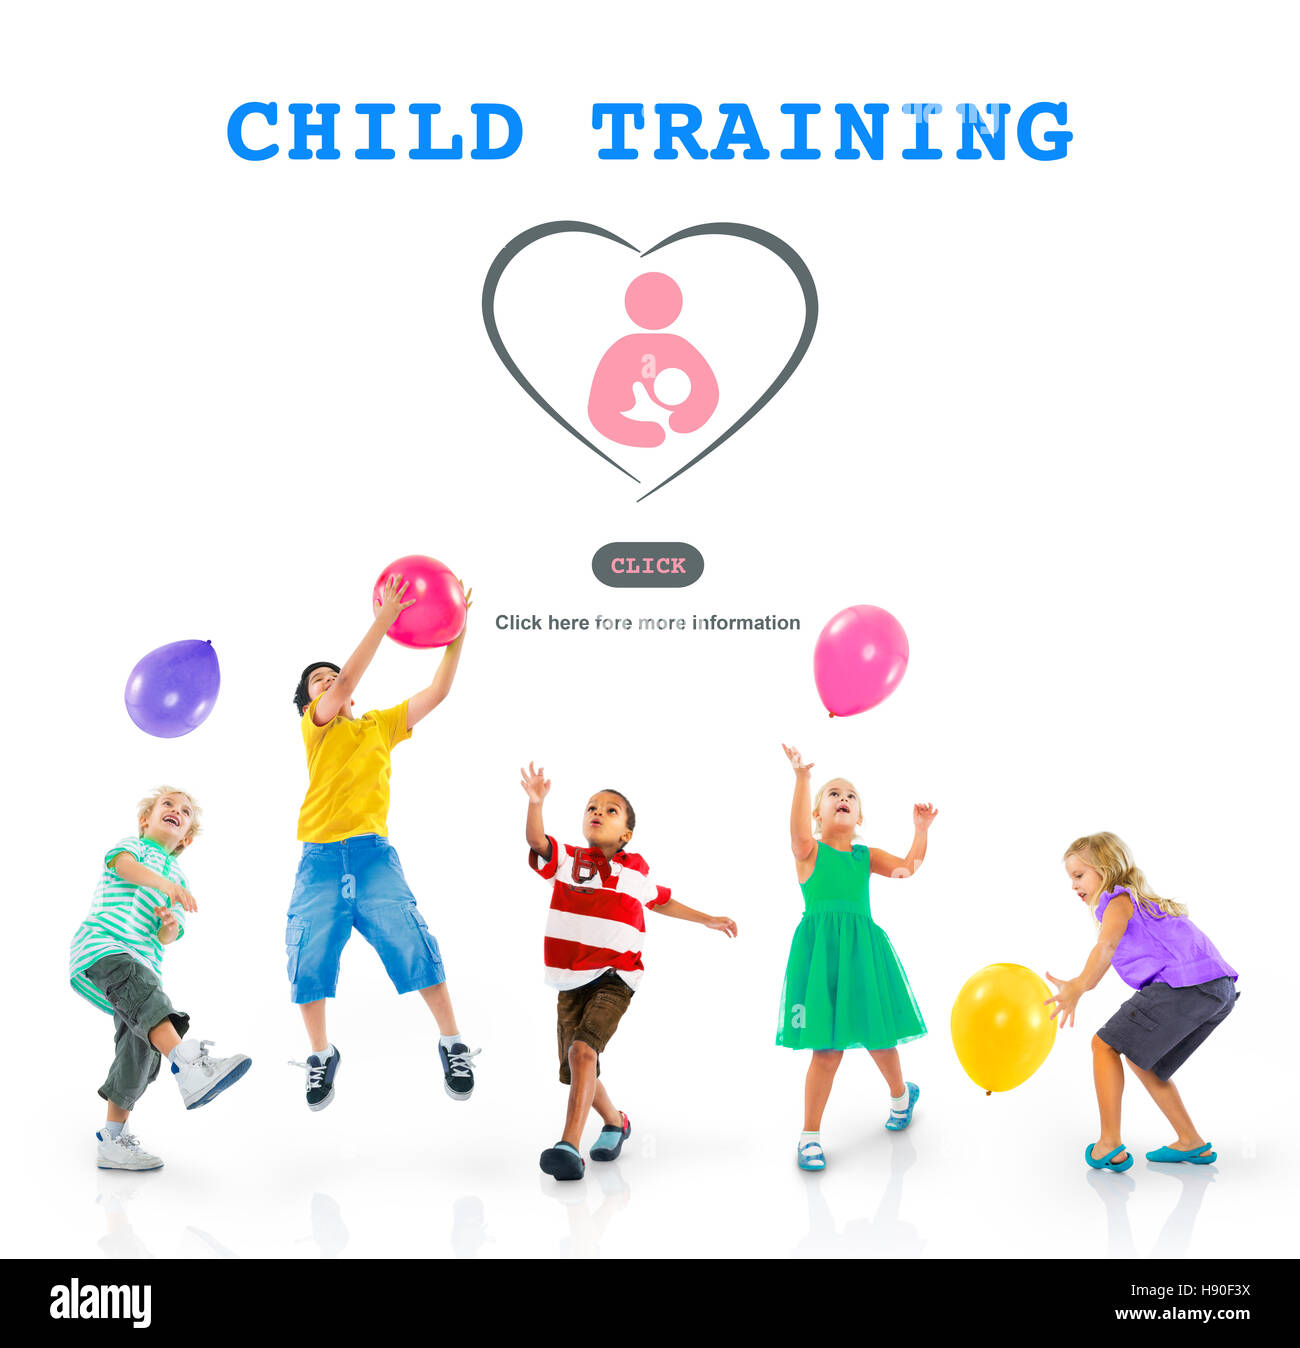 Child Training Comfort Affection Nursery Concept Stock Photo